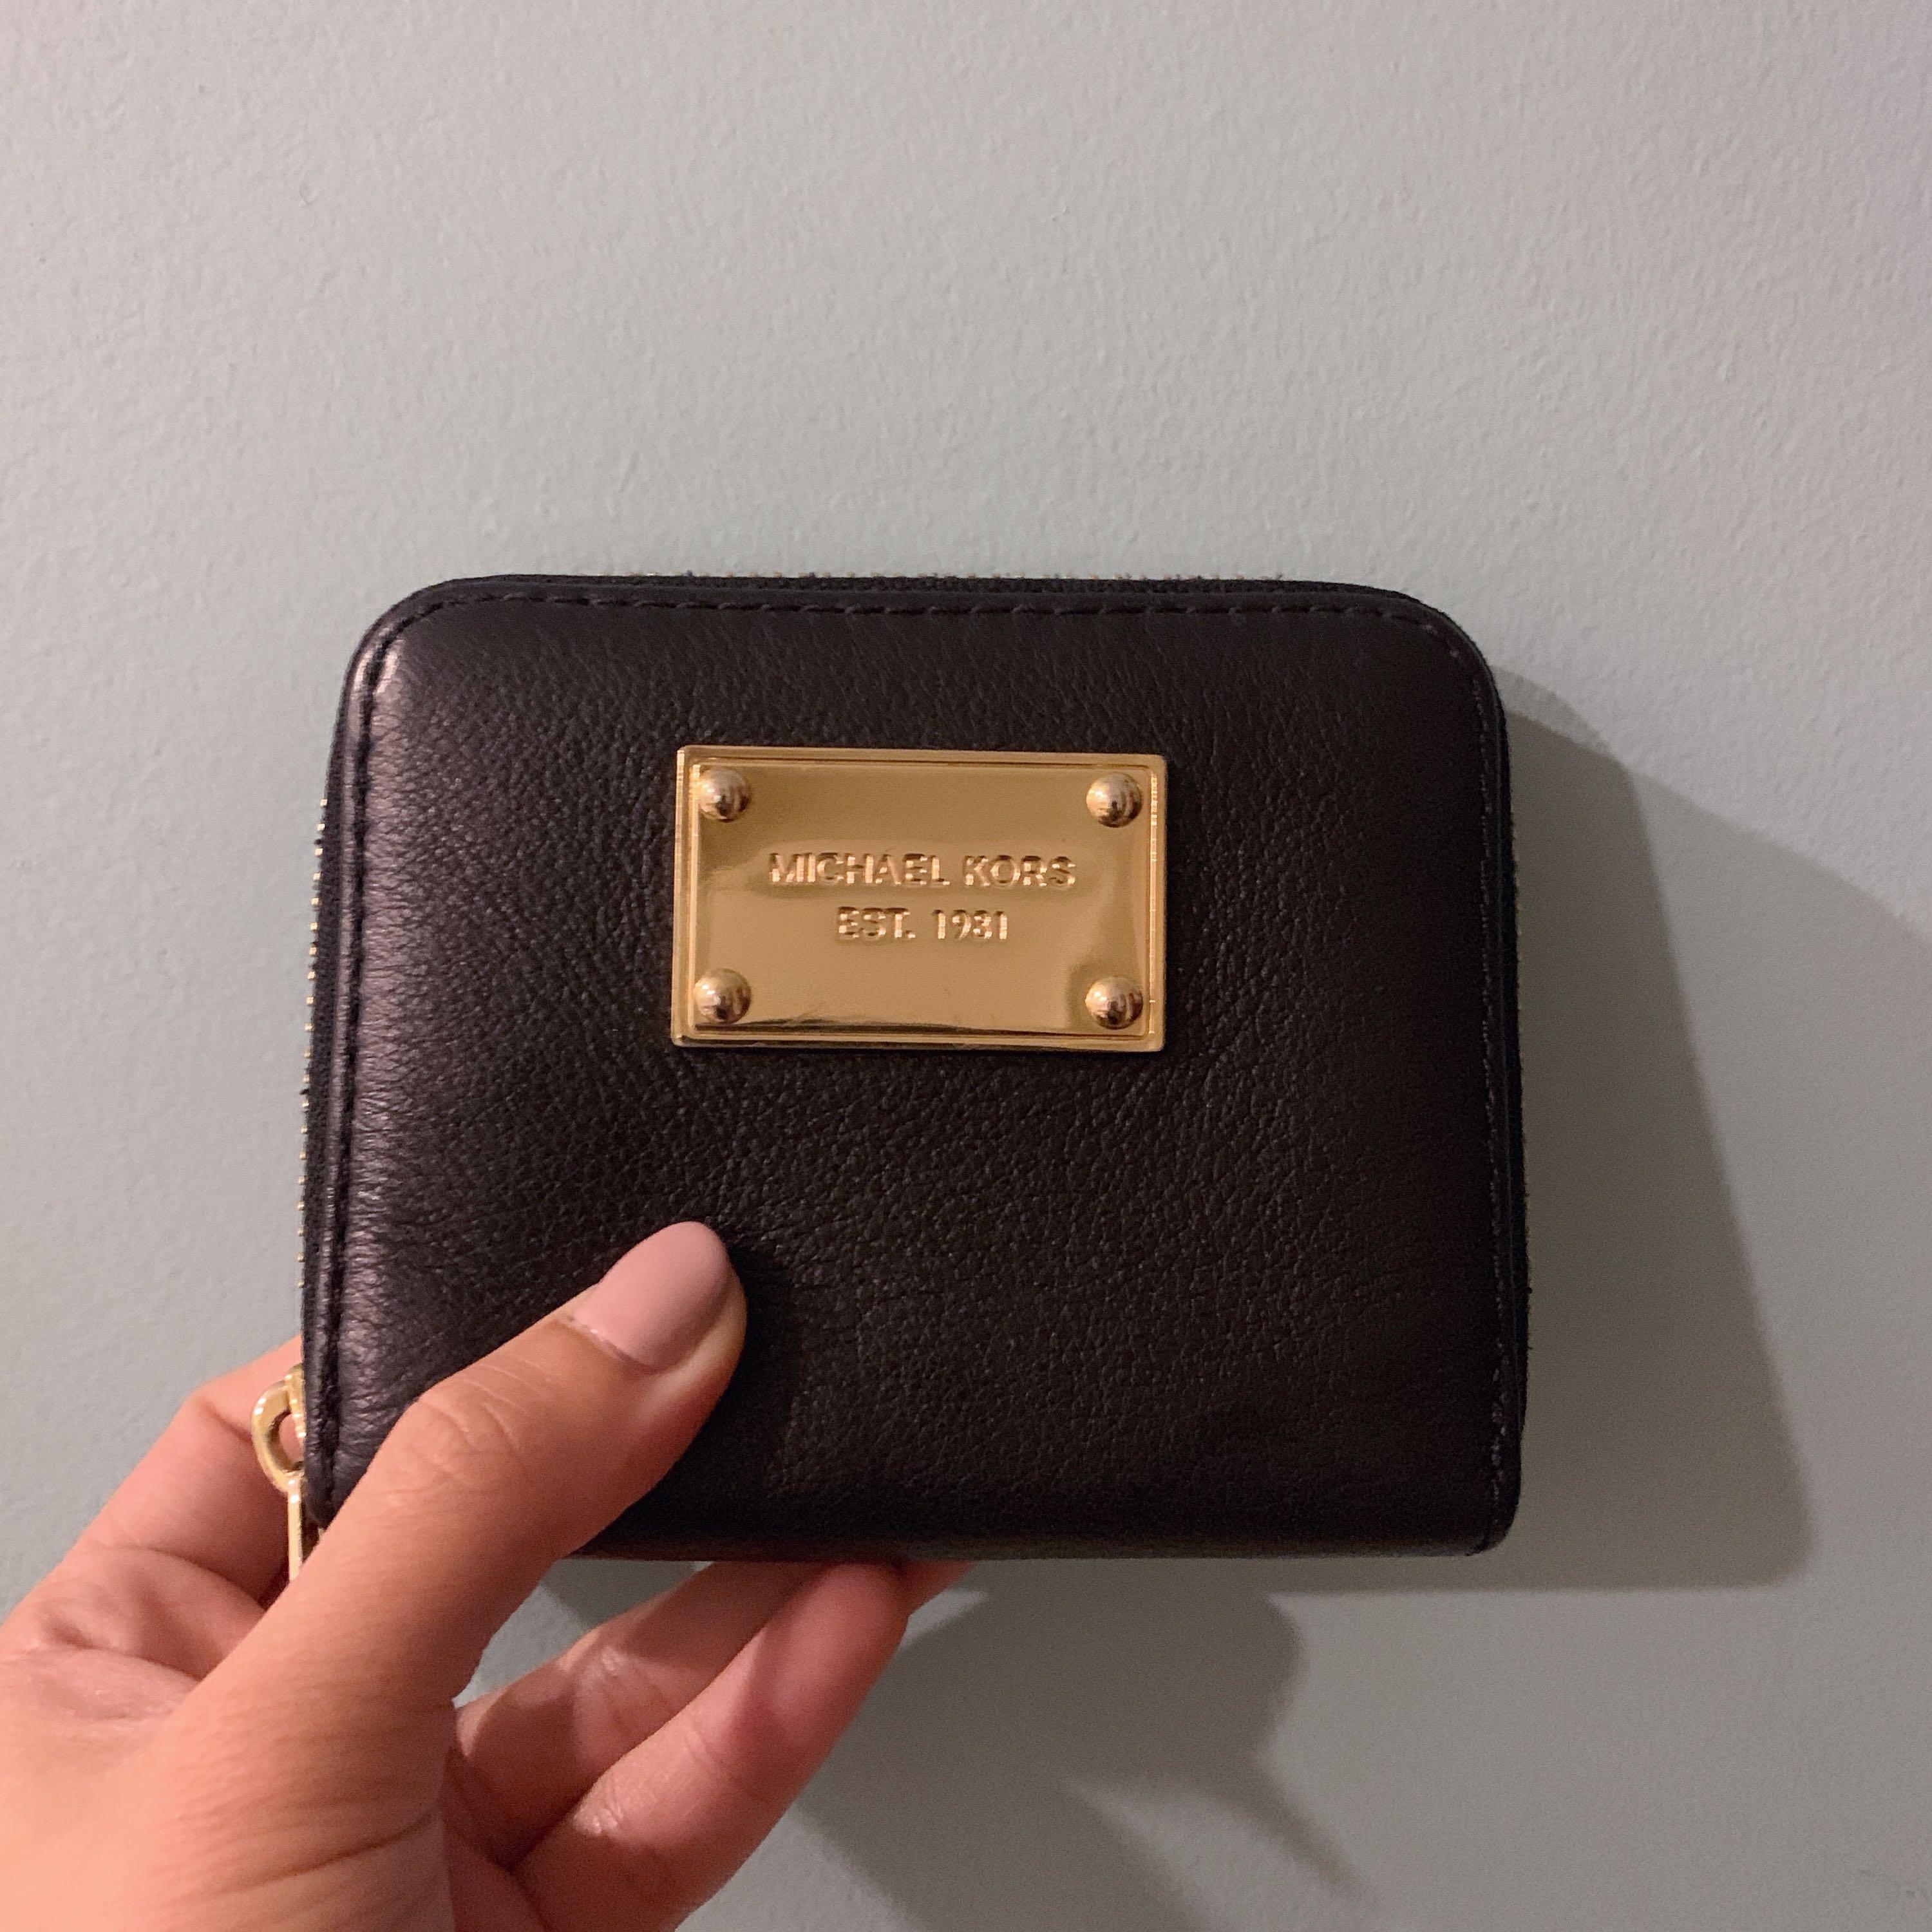 michael kors handbags ebay used